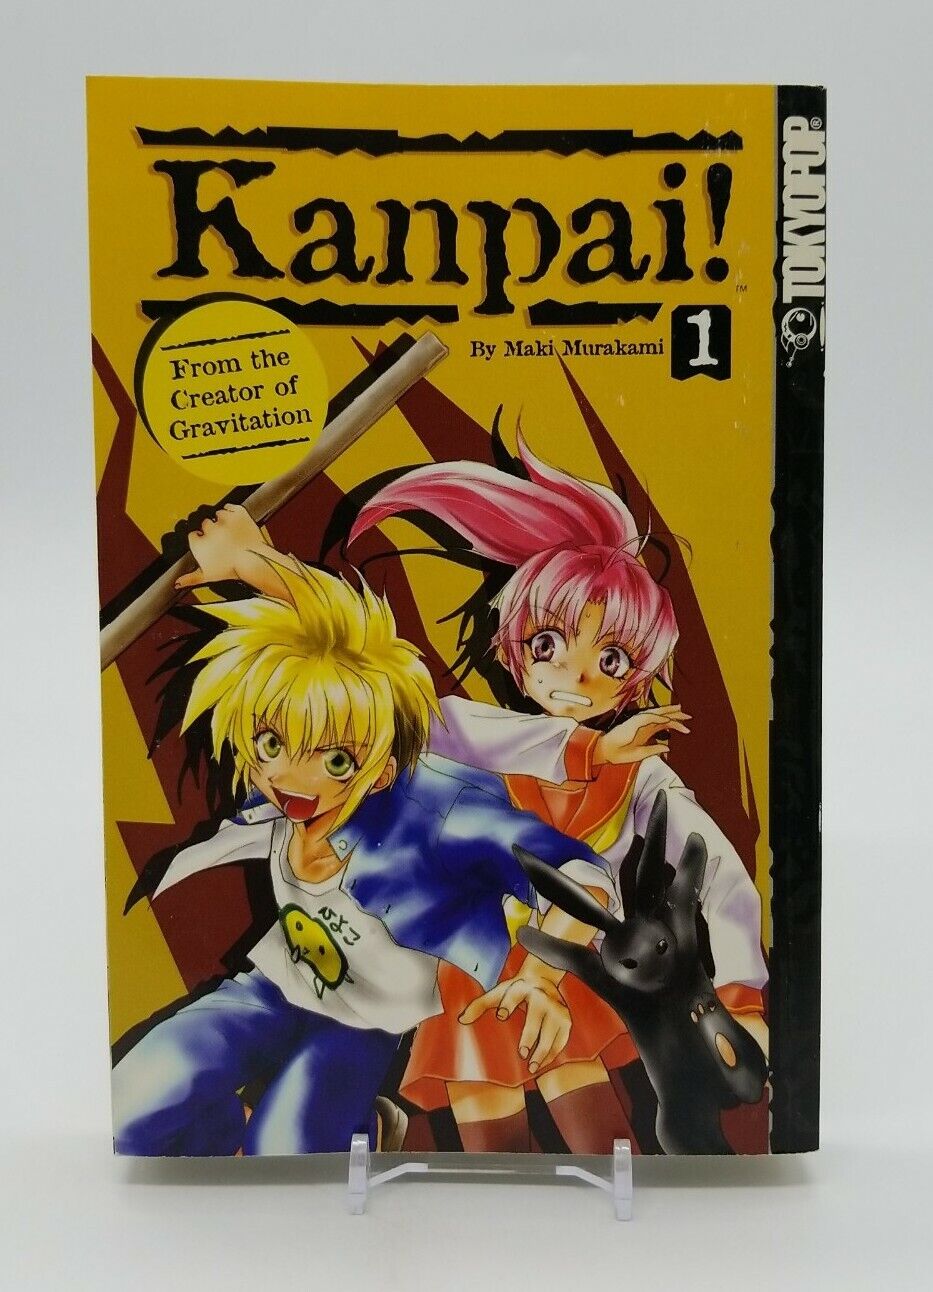 Kanpai Vol 1 by Maki Murakami Tokyopop Anime Manga Trade Paperback Book 2005 PB